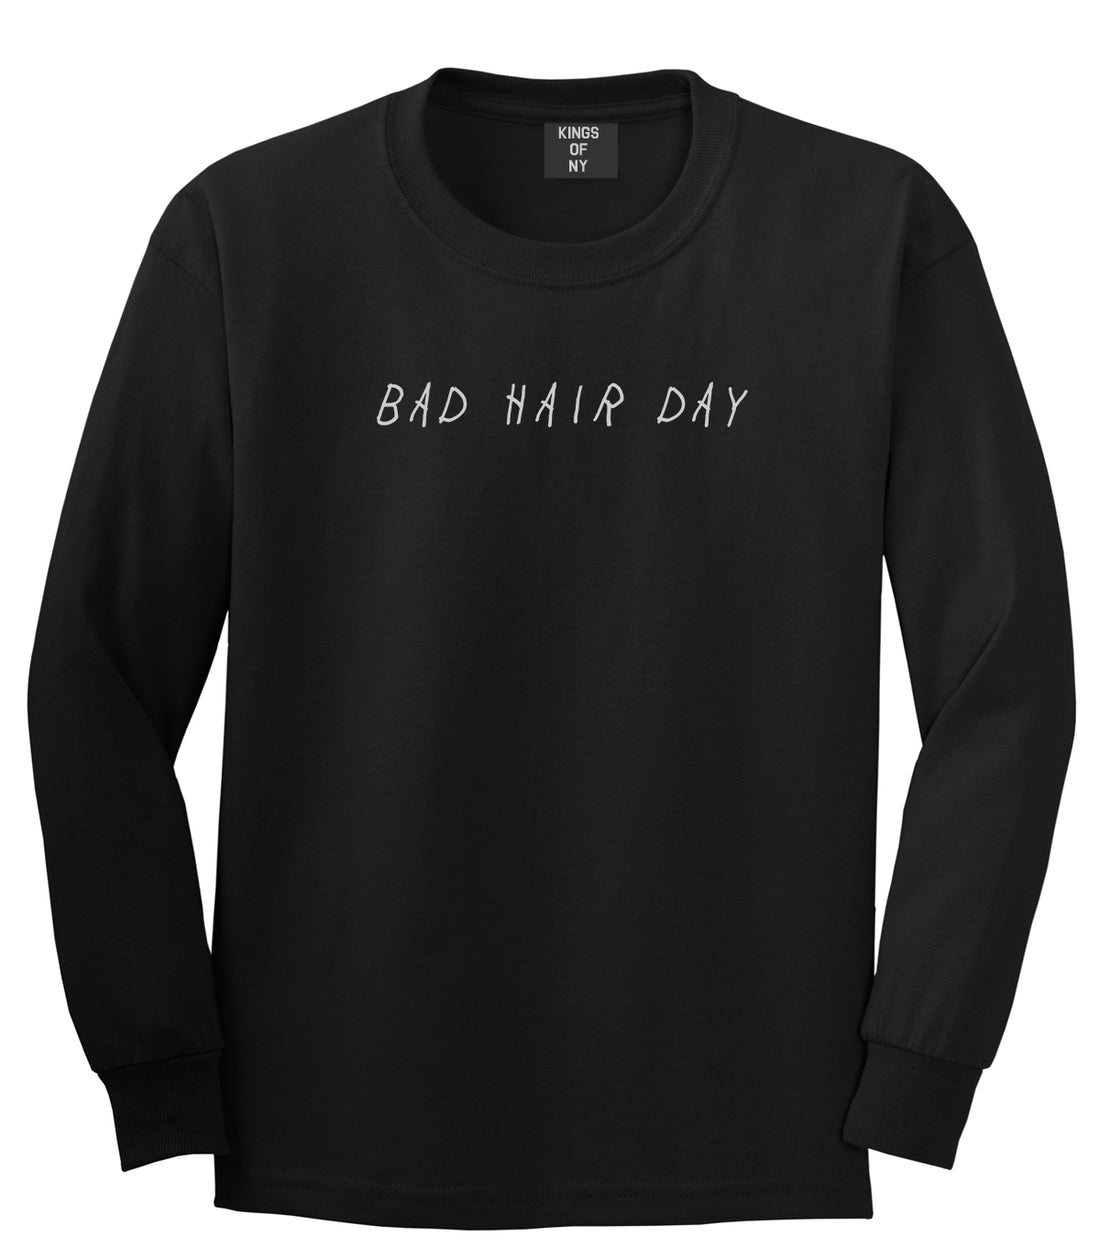 Bad Hair Day Black Long Sleeve T-Shirt by Kings Of NY